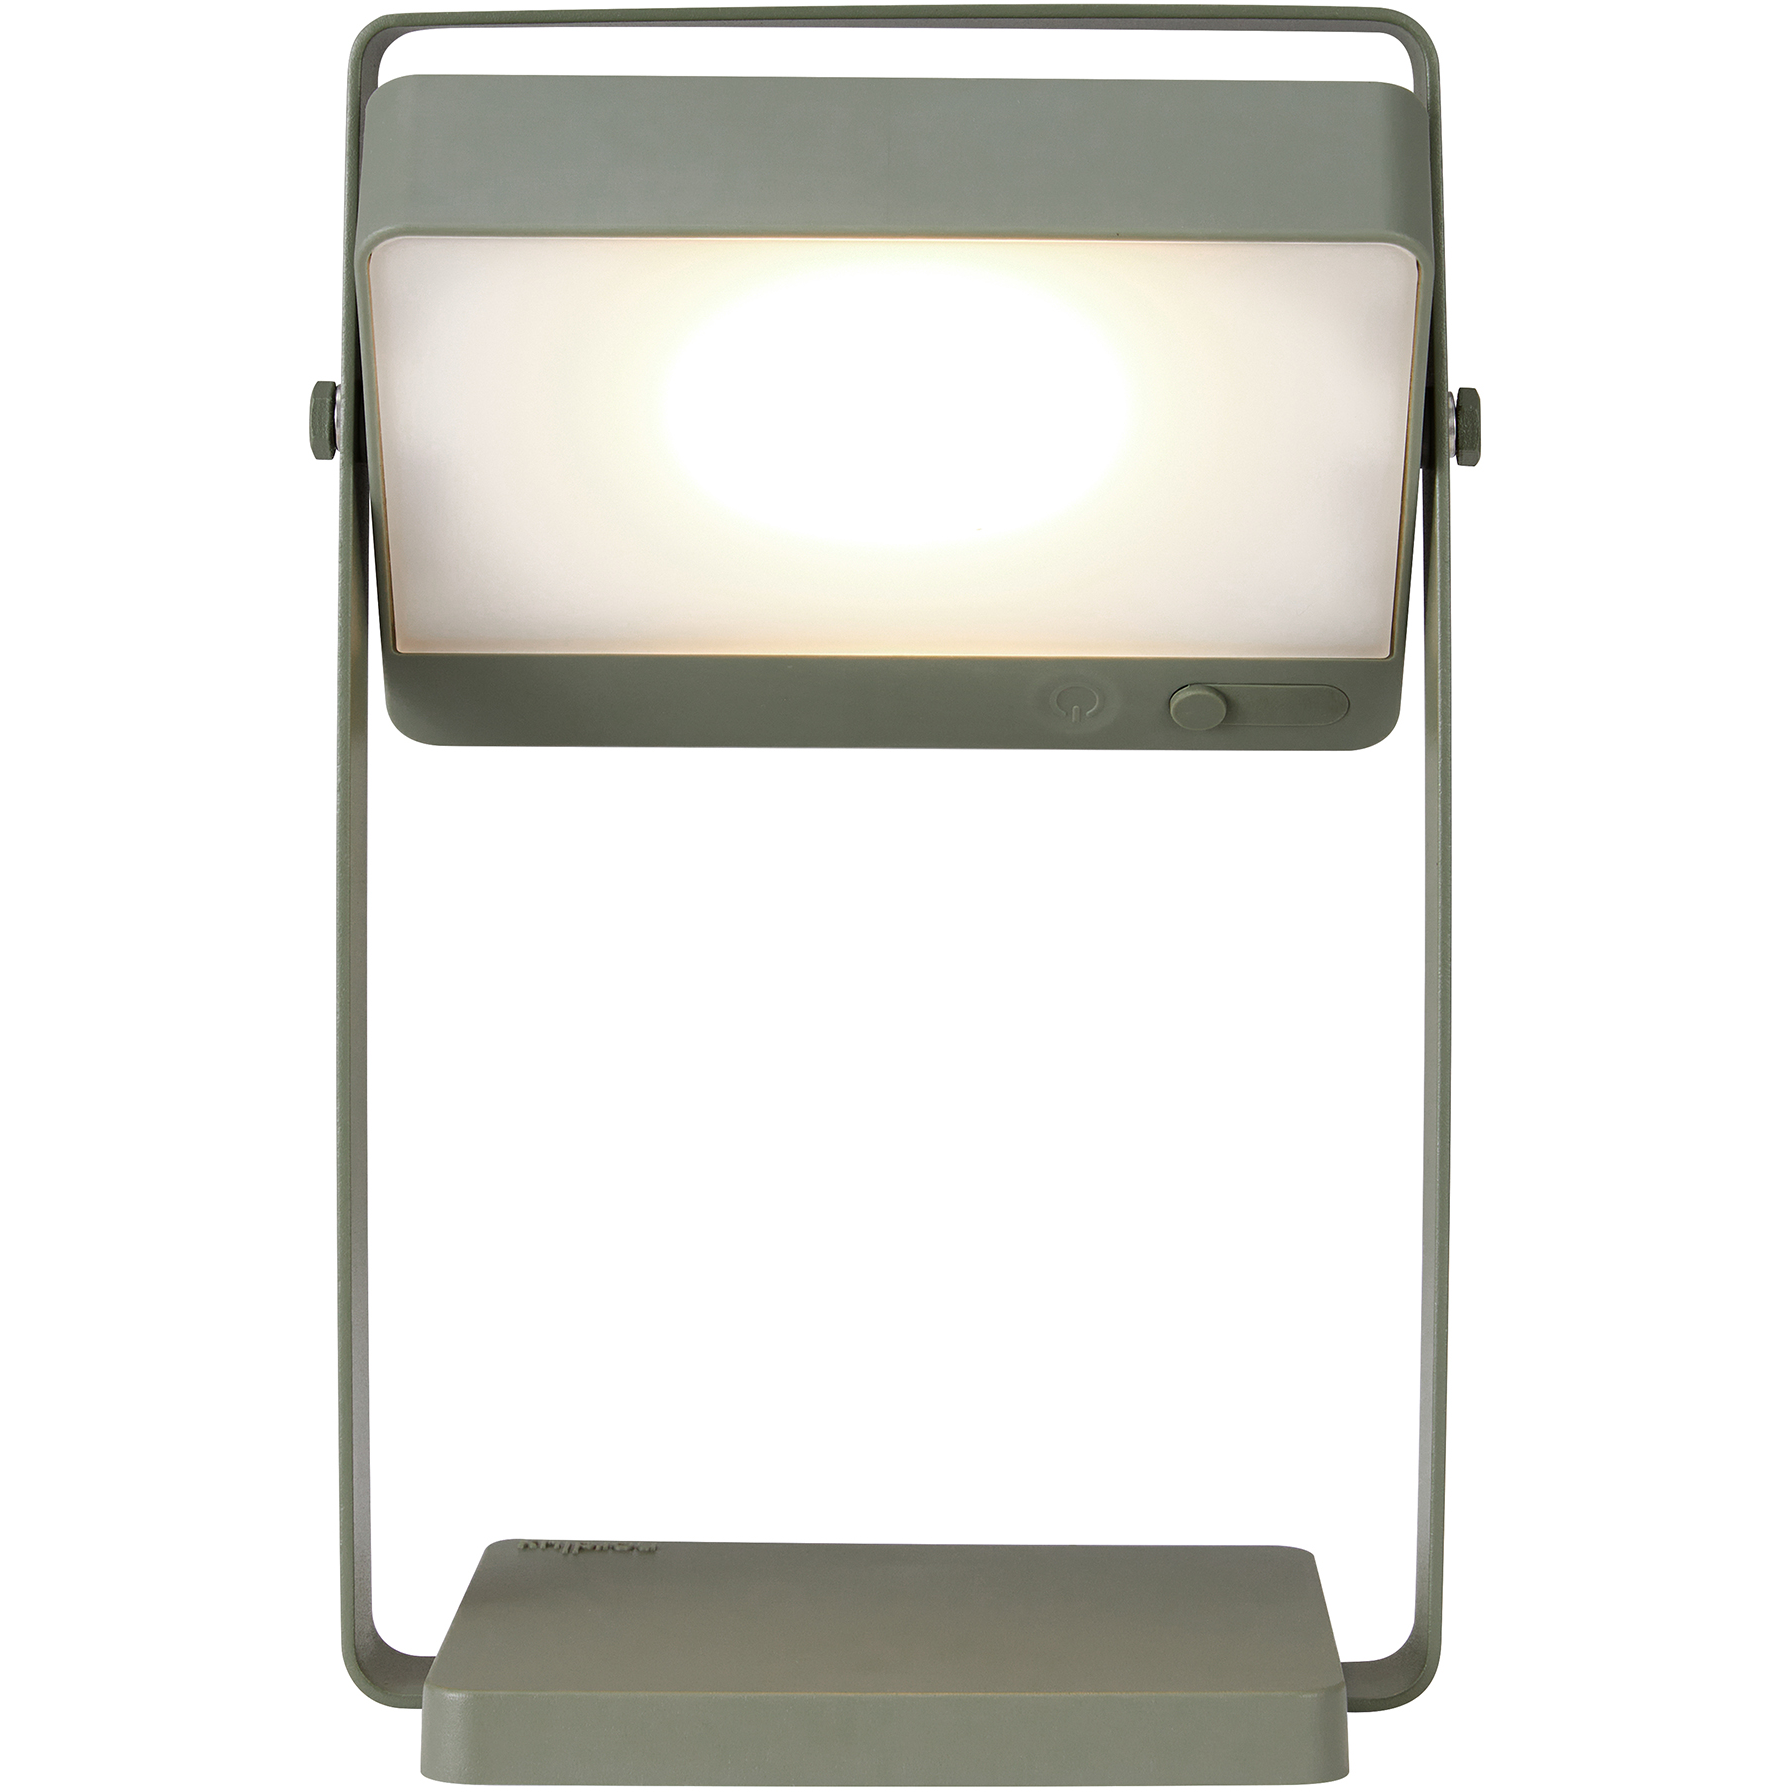 5704924017520 Nordlux Saulio olive - Bordlampe solcelle Lamper,Udendørs- lamper,Solcelle lamper 87100011680 2418035023